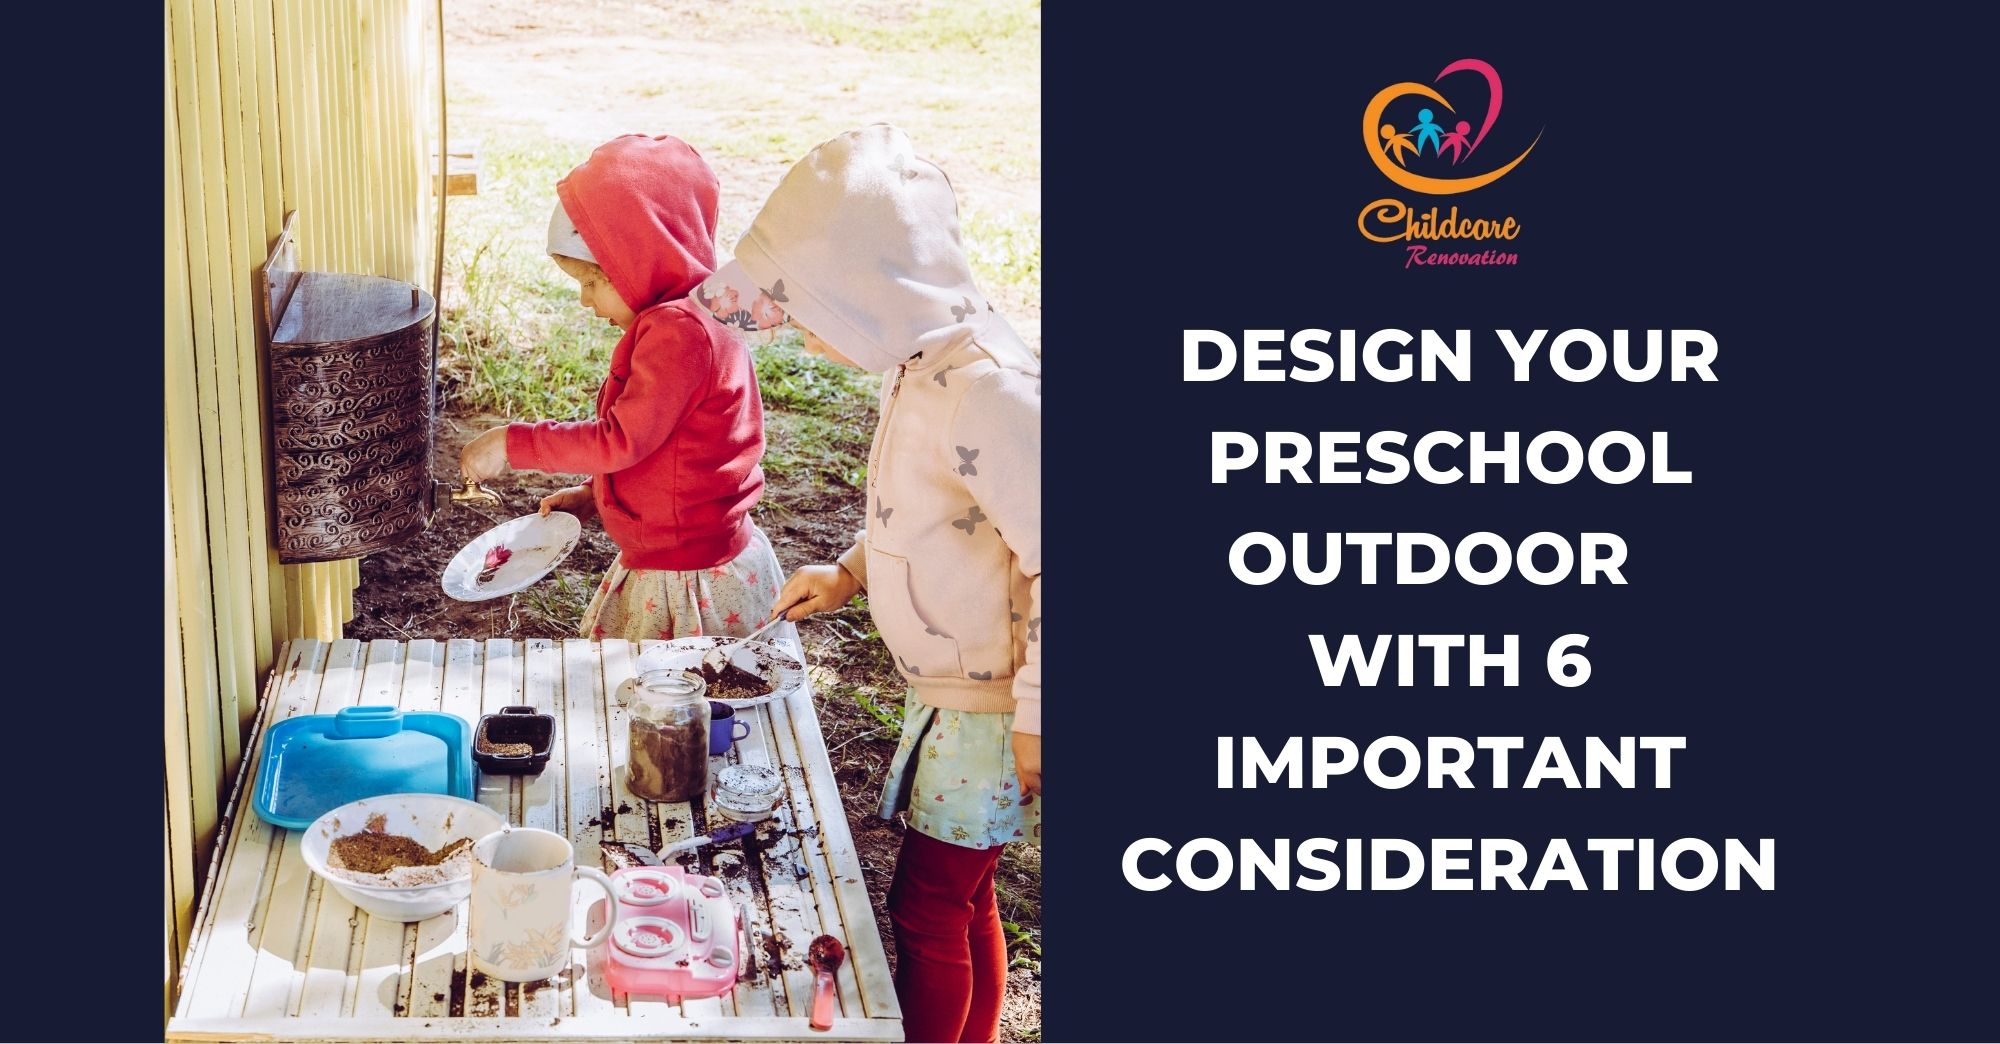 Design Preschool Outdoor With 6 Important Consideration